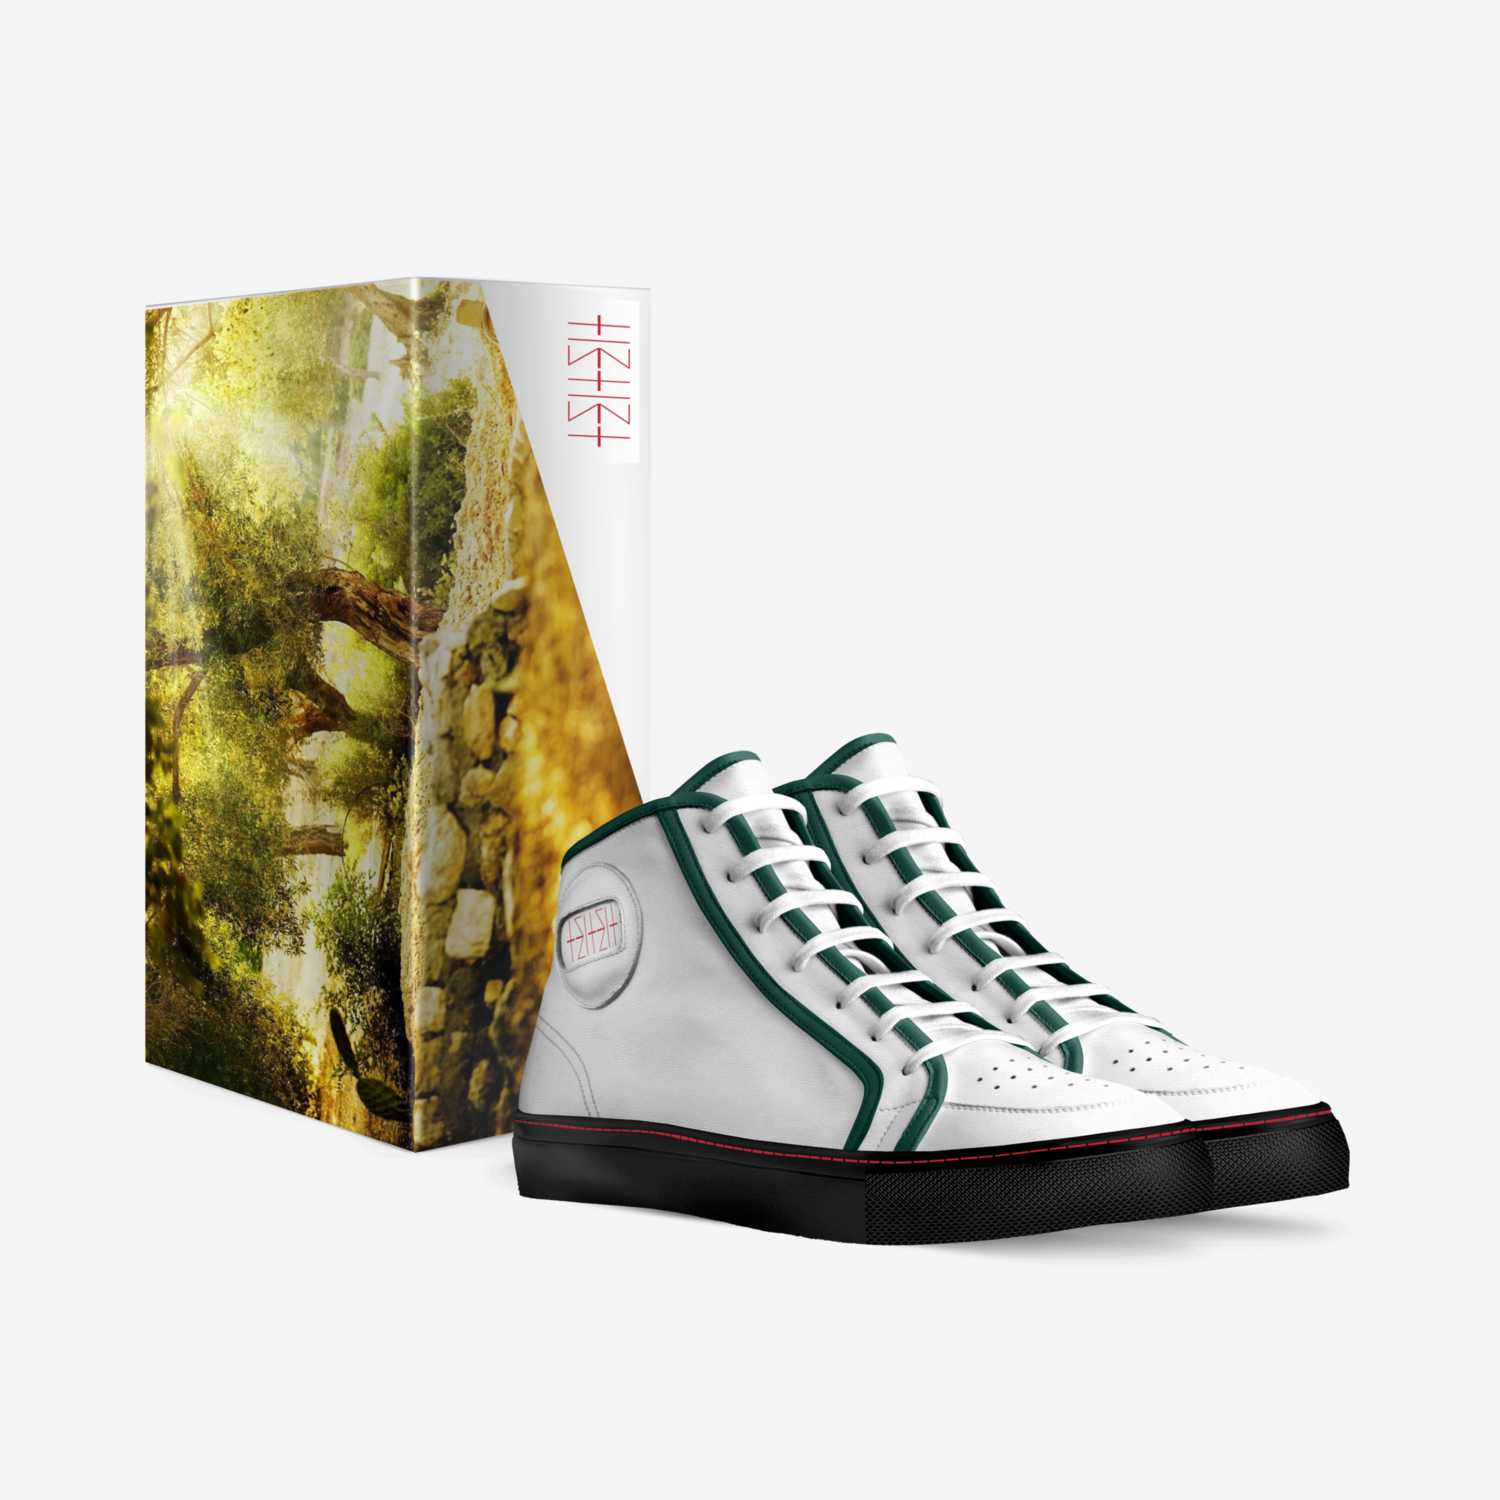 Nazareth custom made in Italy shoes by Ricardo Yoreh Ladino | Box view